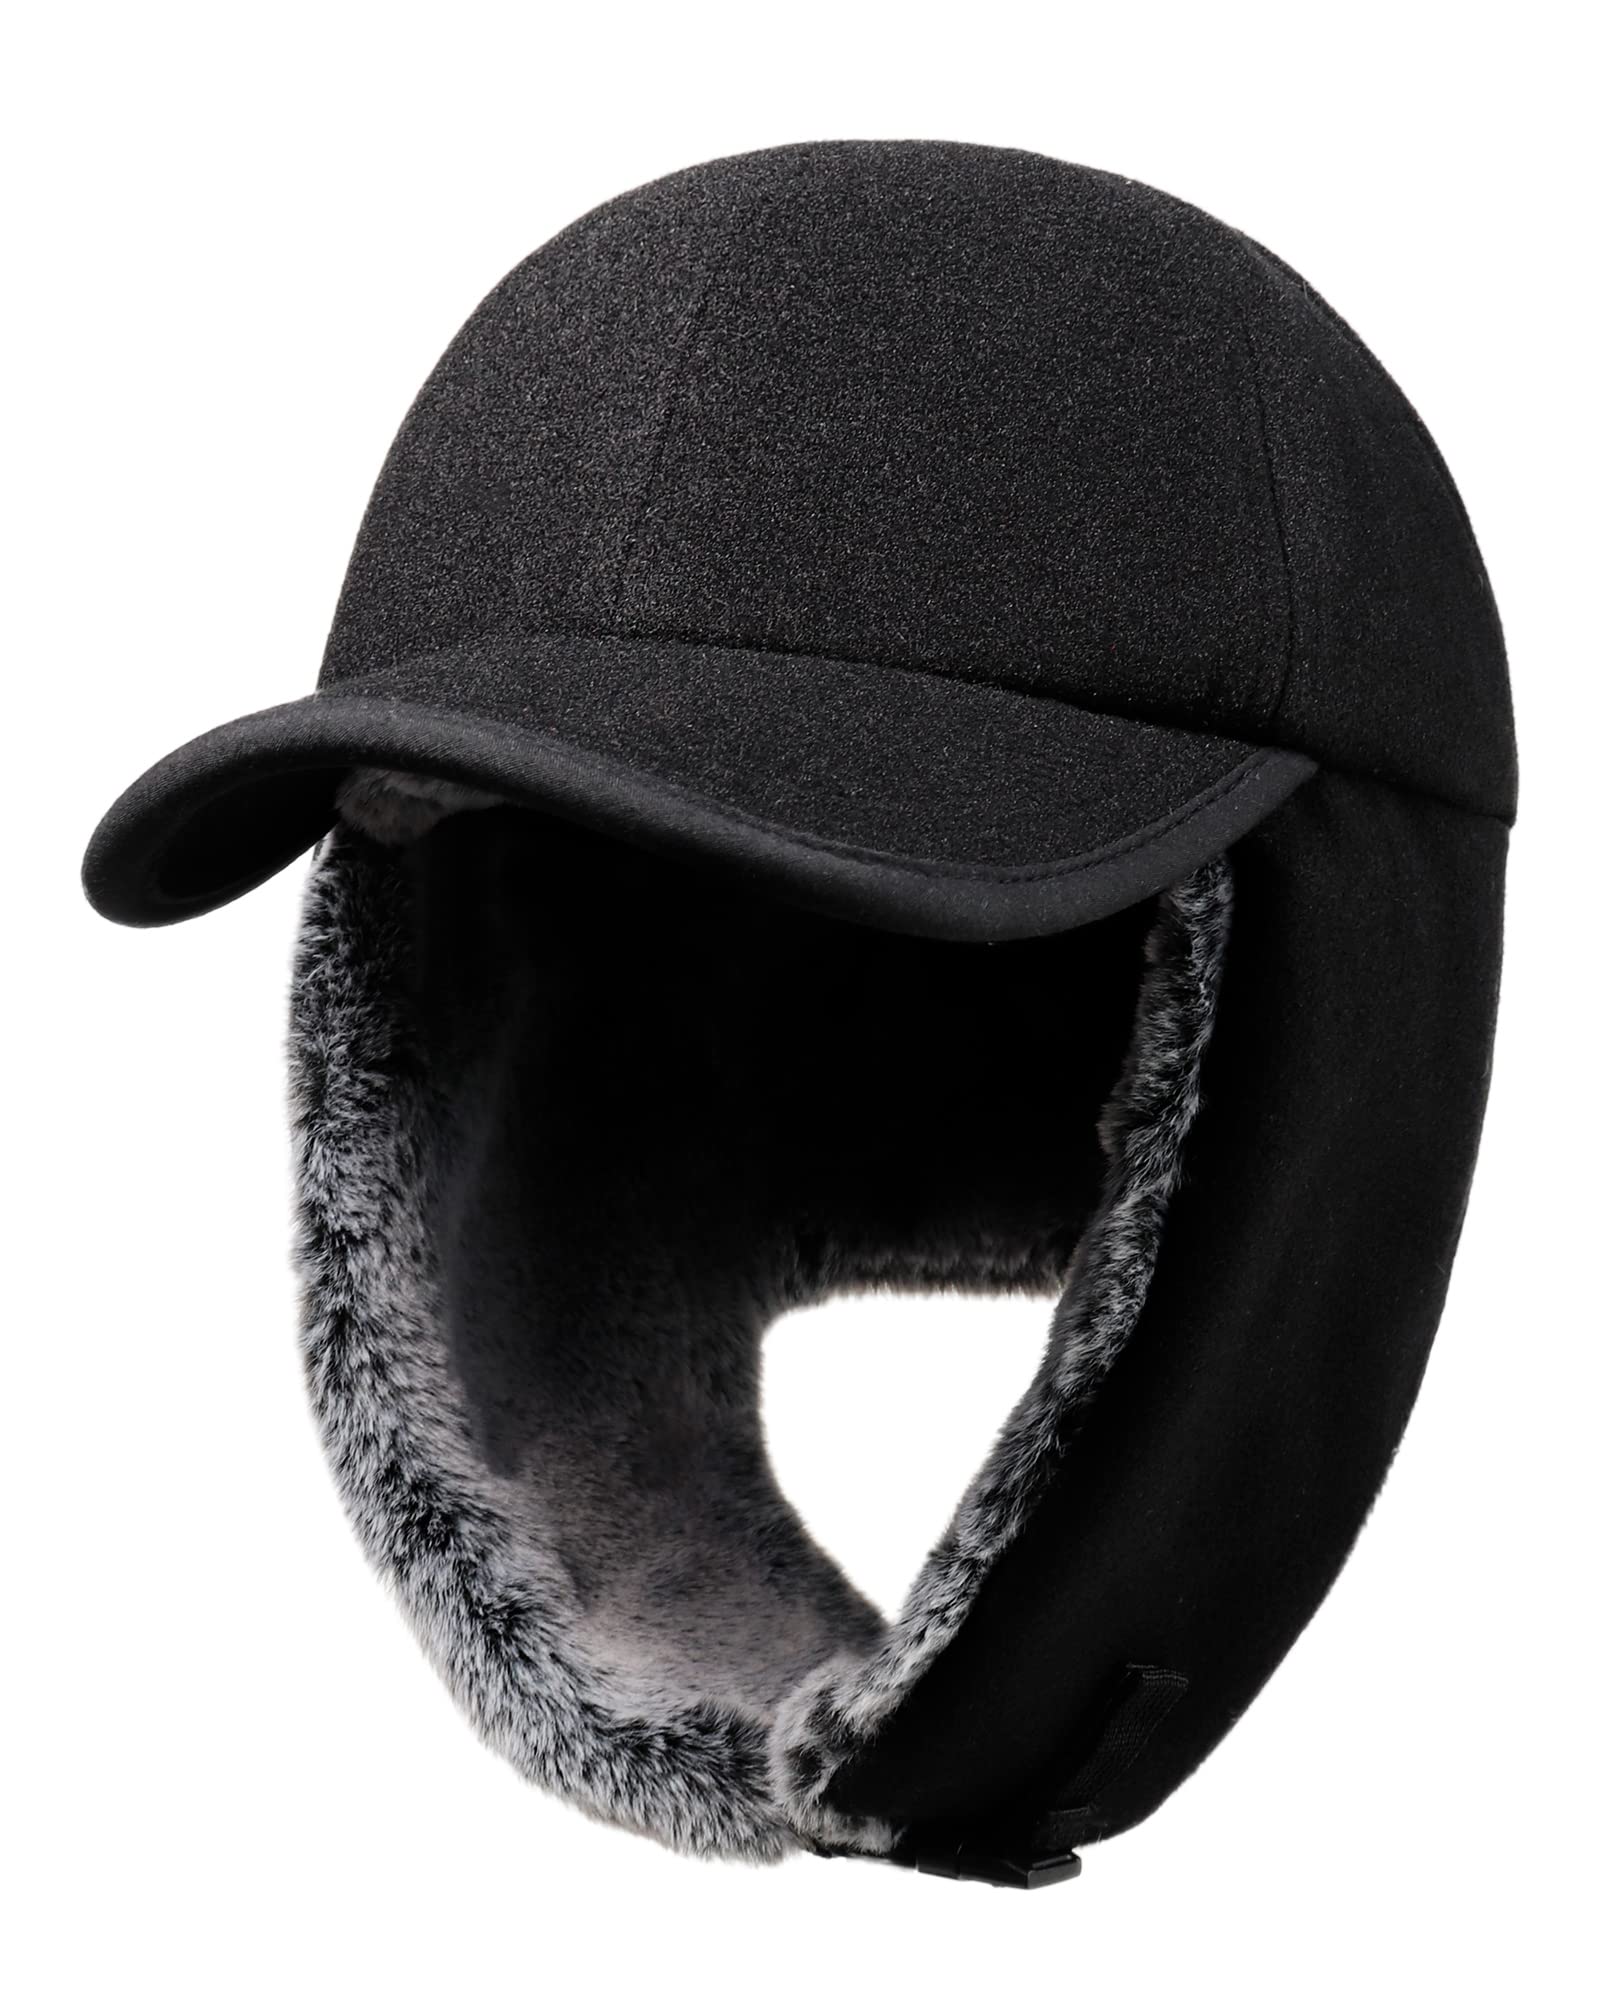 Gisdanchz Winter Baseball Cap - Medium-Large Blend Fur Fully Outer, Long Flaps Lined with Ear Black Faux Woolen